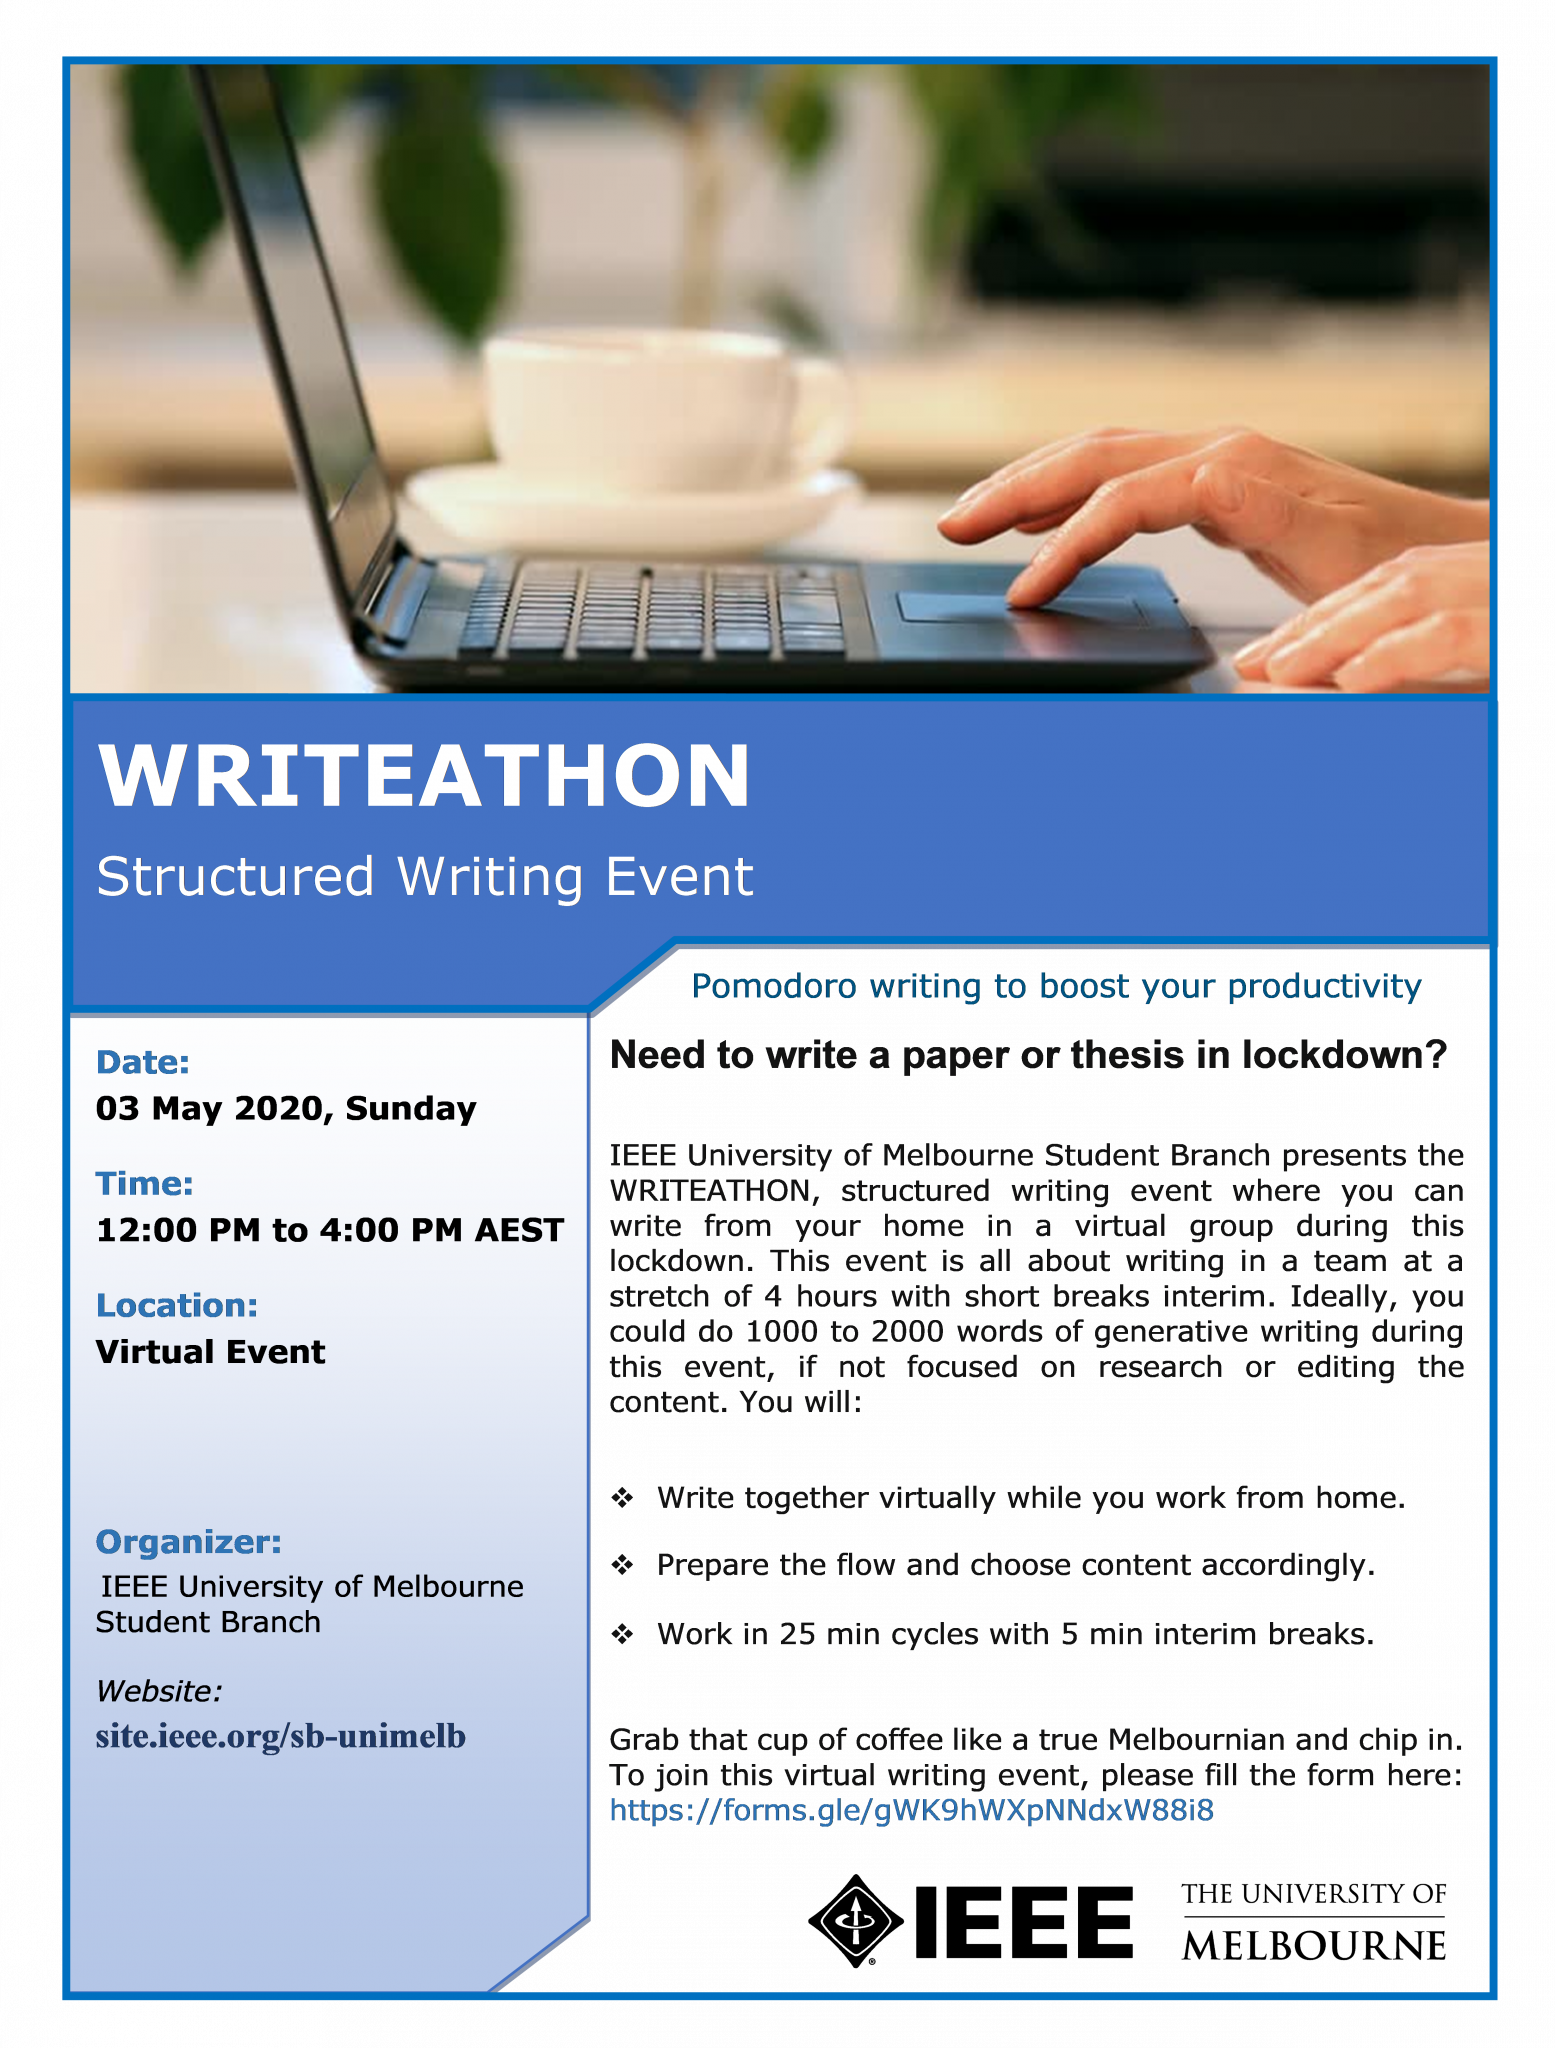 WRITEATHON – IEEE VICTORIAN SECTION